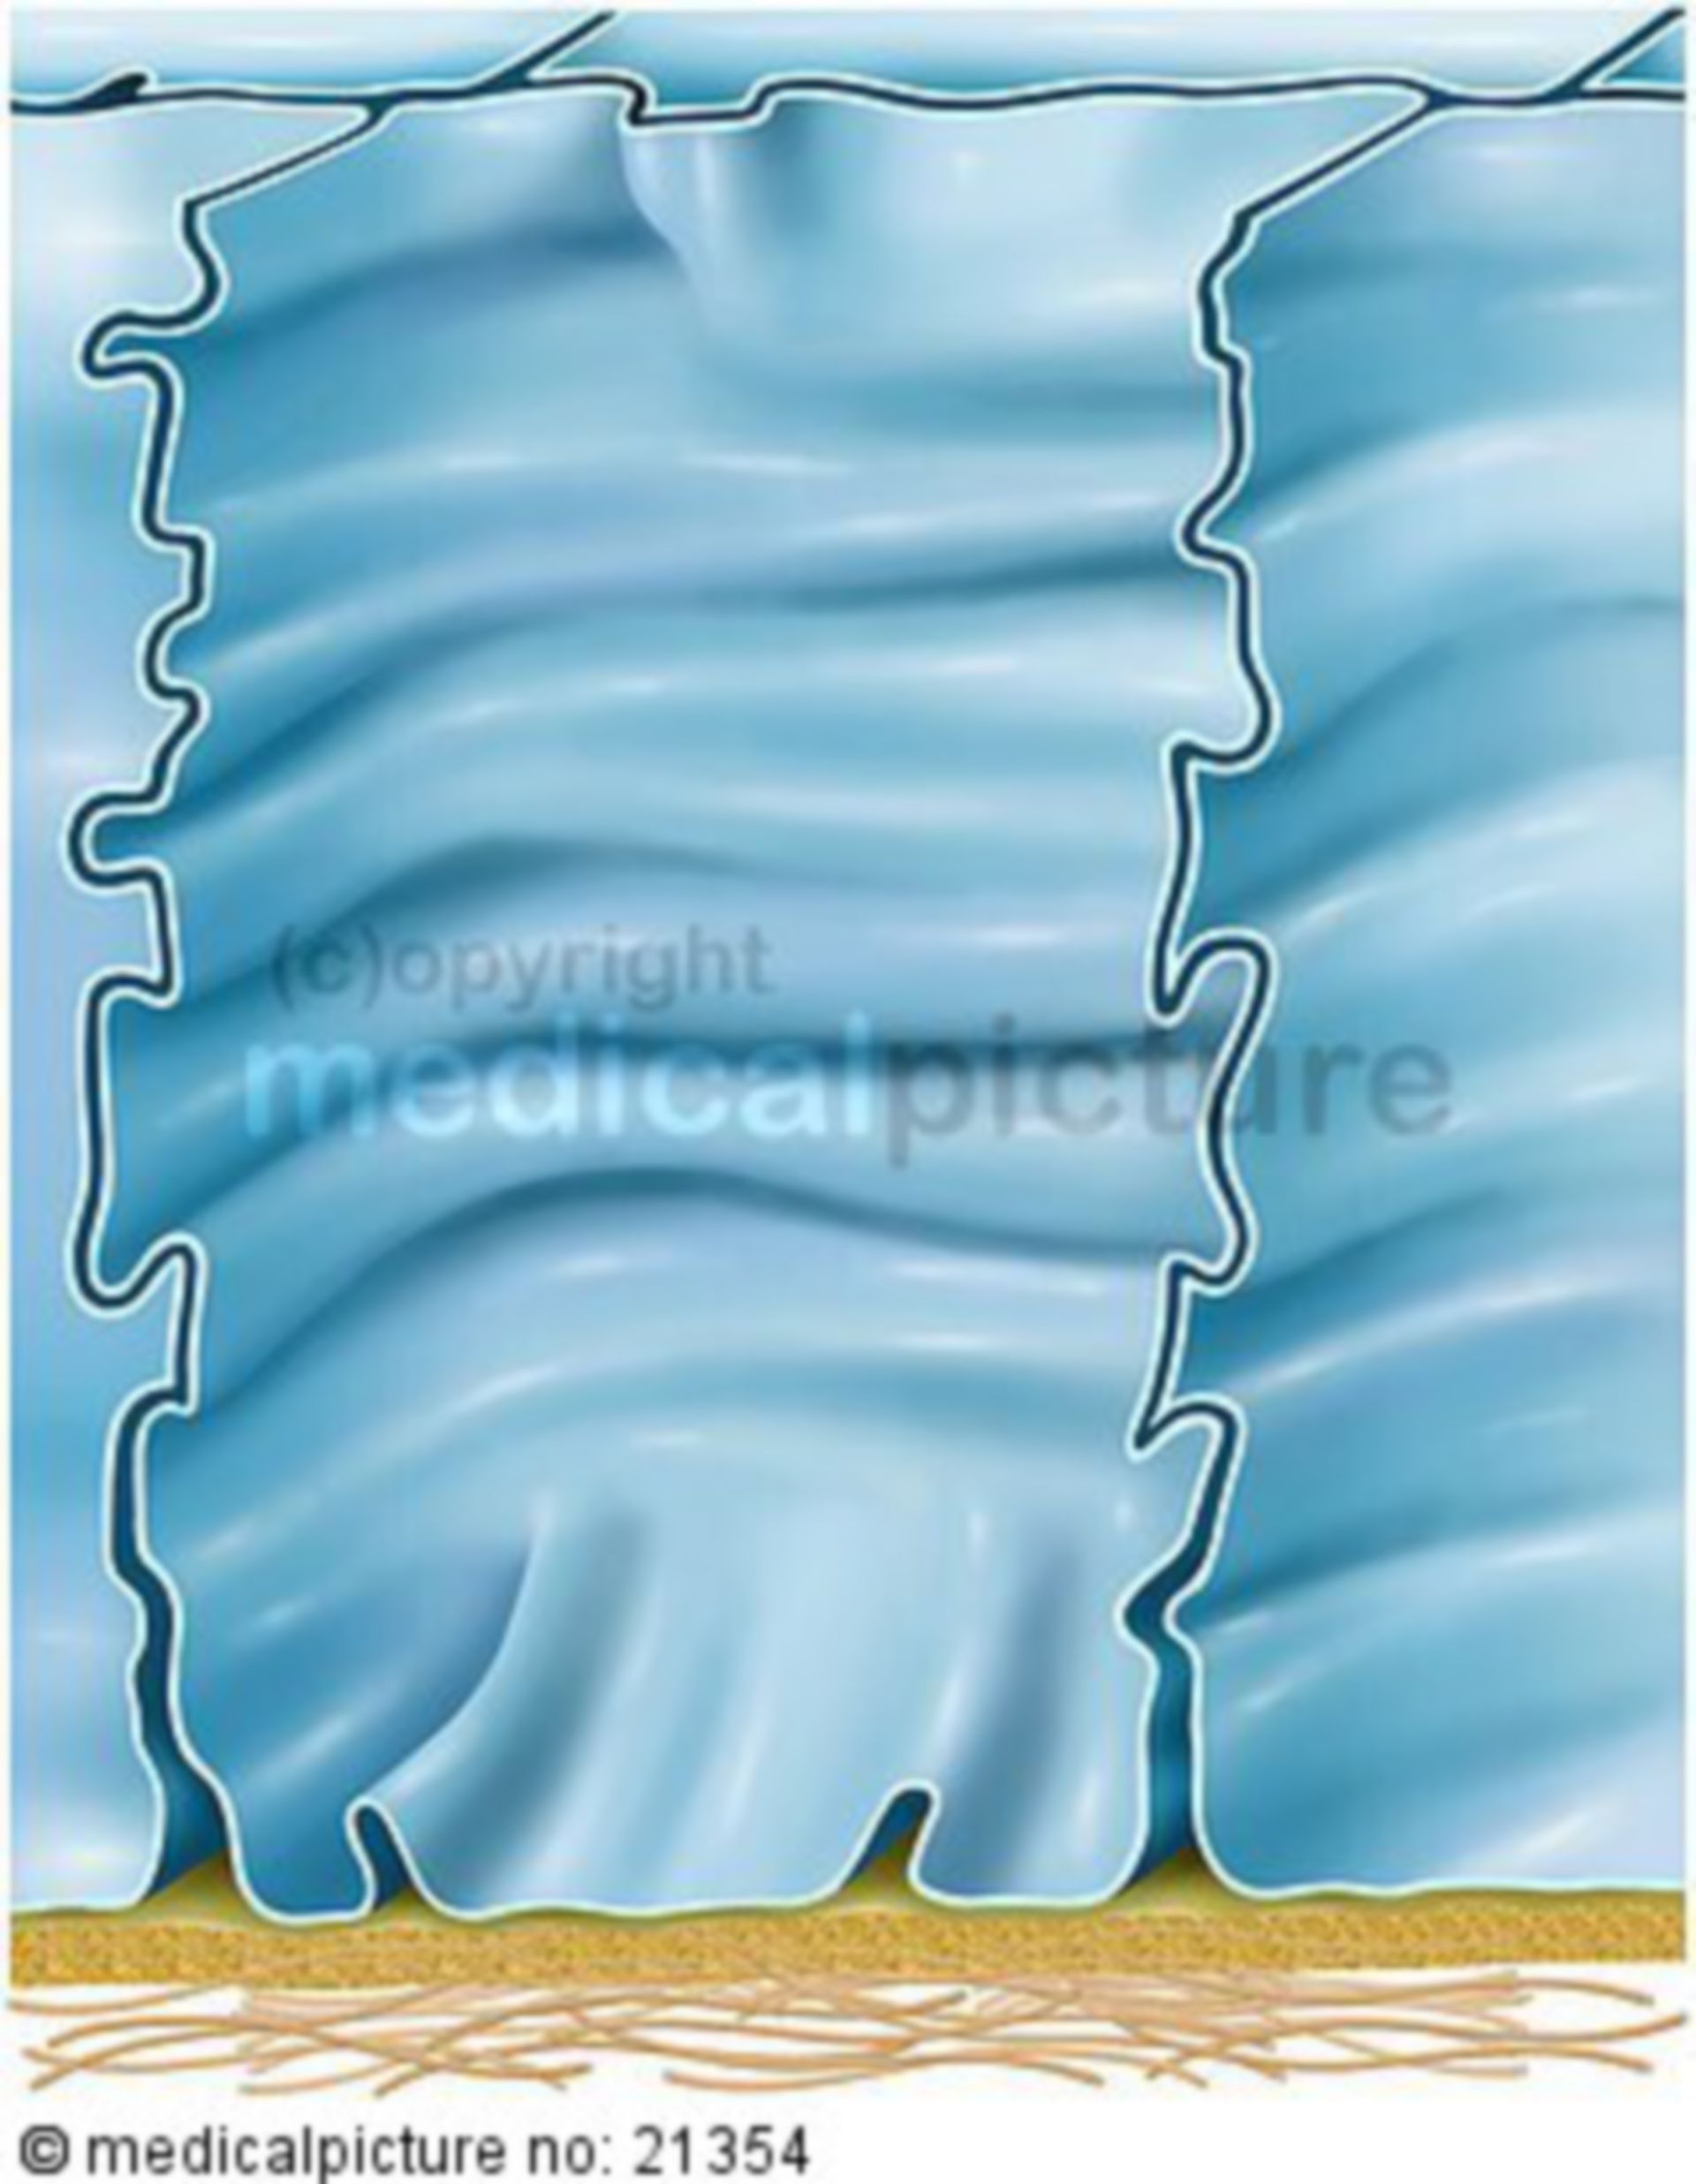  Membraneinfaltungen der Epithelzellen 
